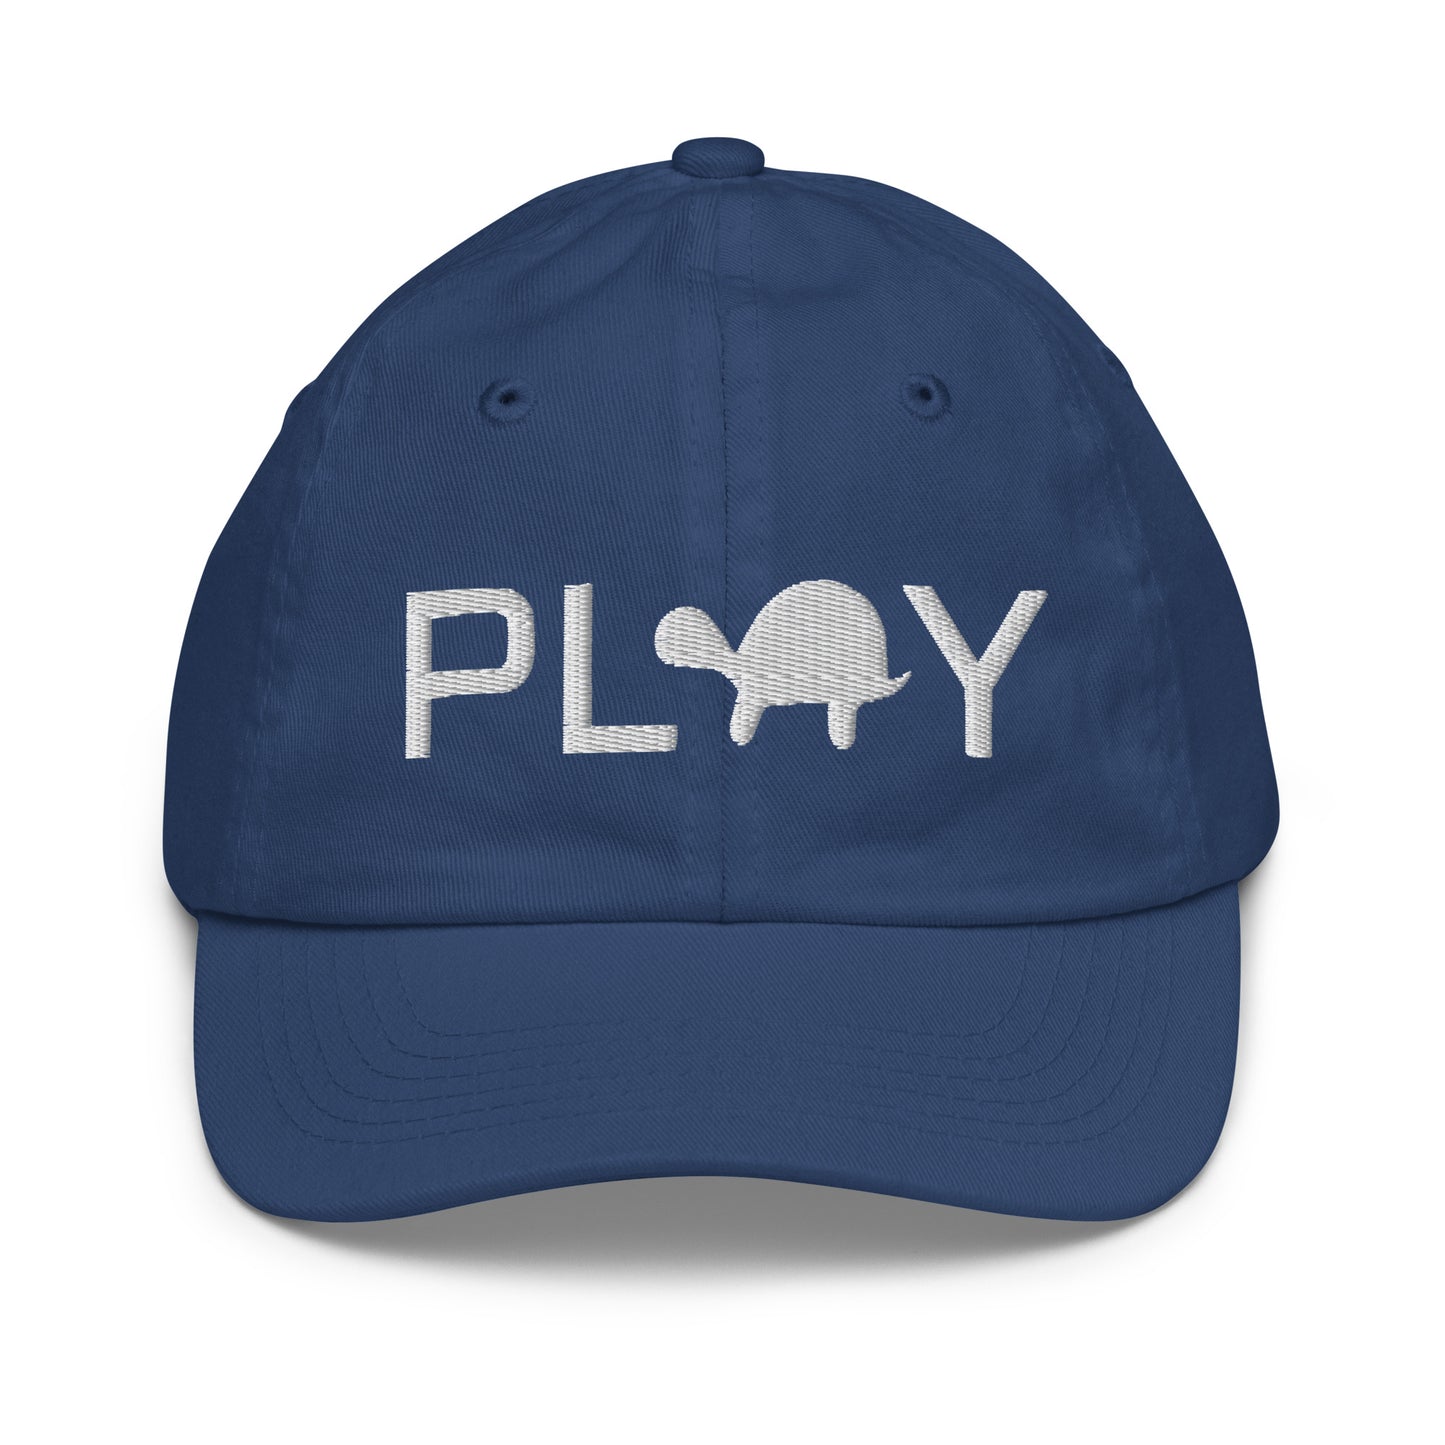 Play Kids Cap